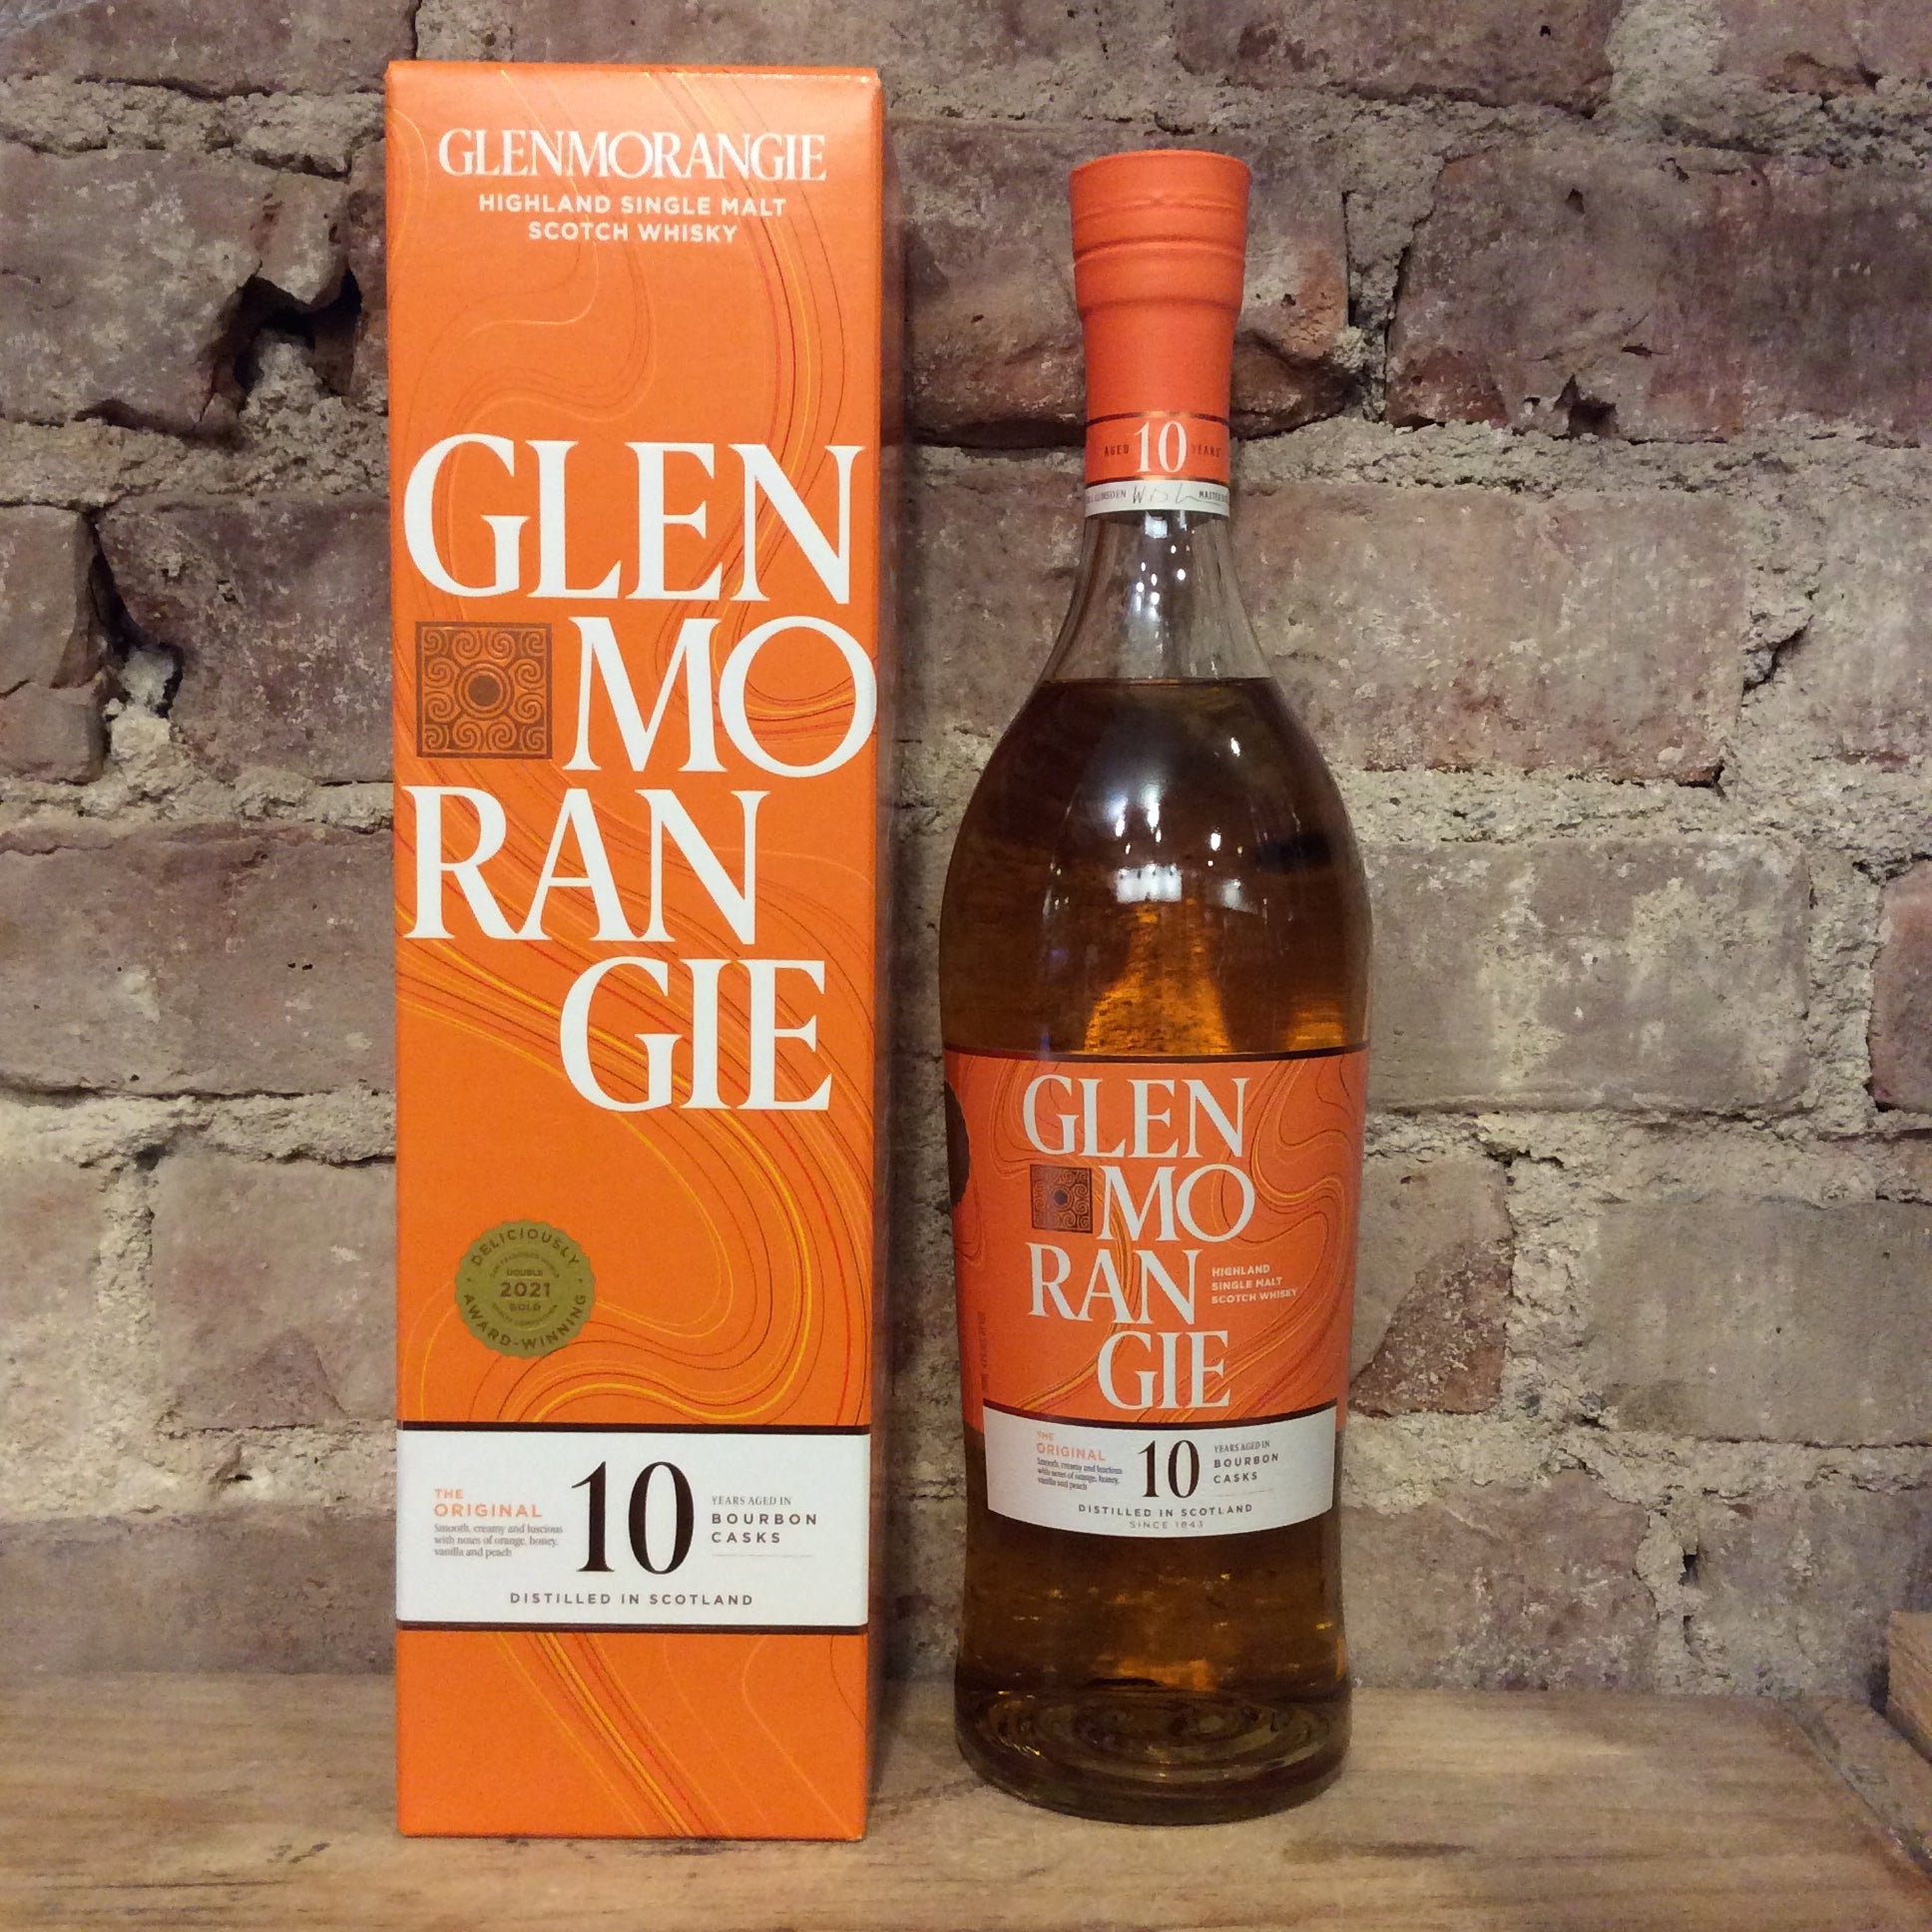 Glenmorangie The Original 10 Year Old Single Malt Scotch Whisky